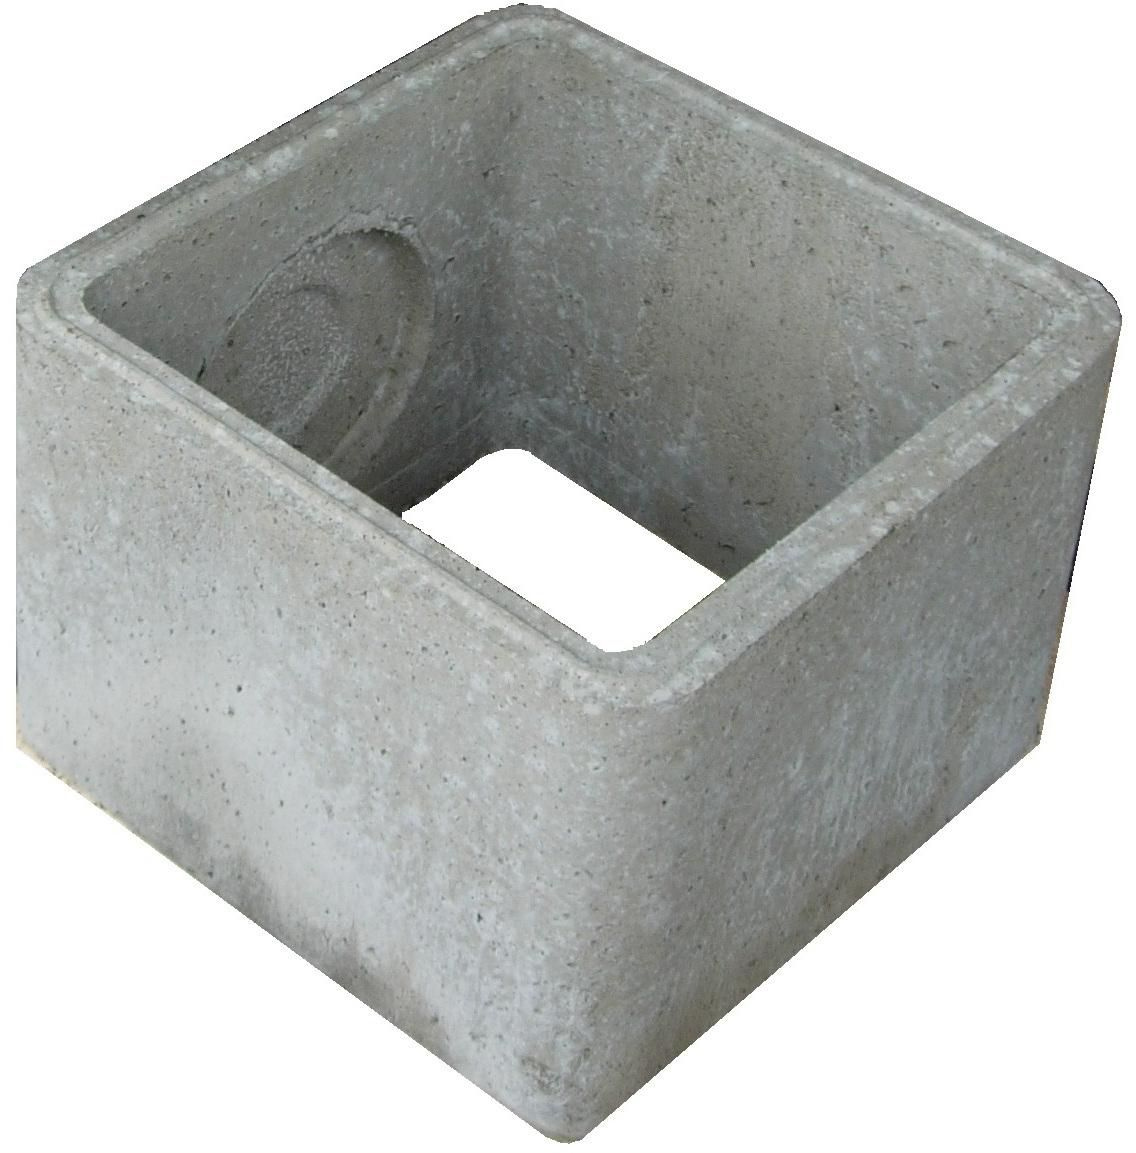 rehausse-beton-regard-400x400-h250-dim-ext-alkern-0